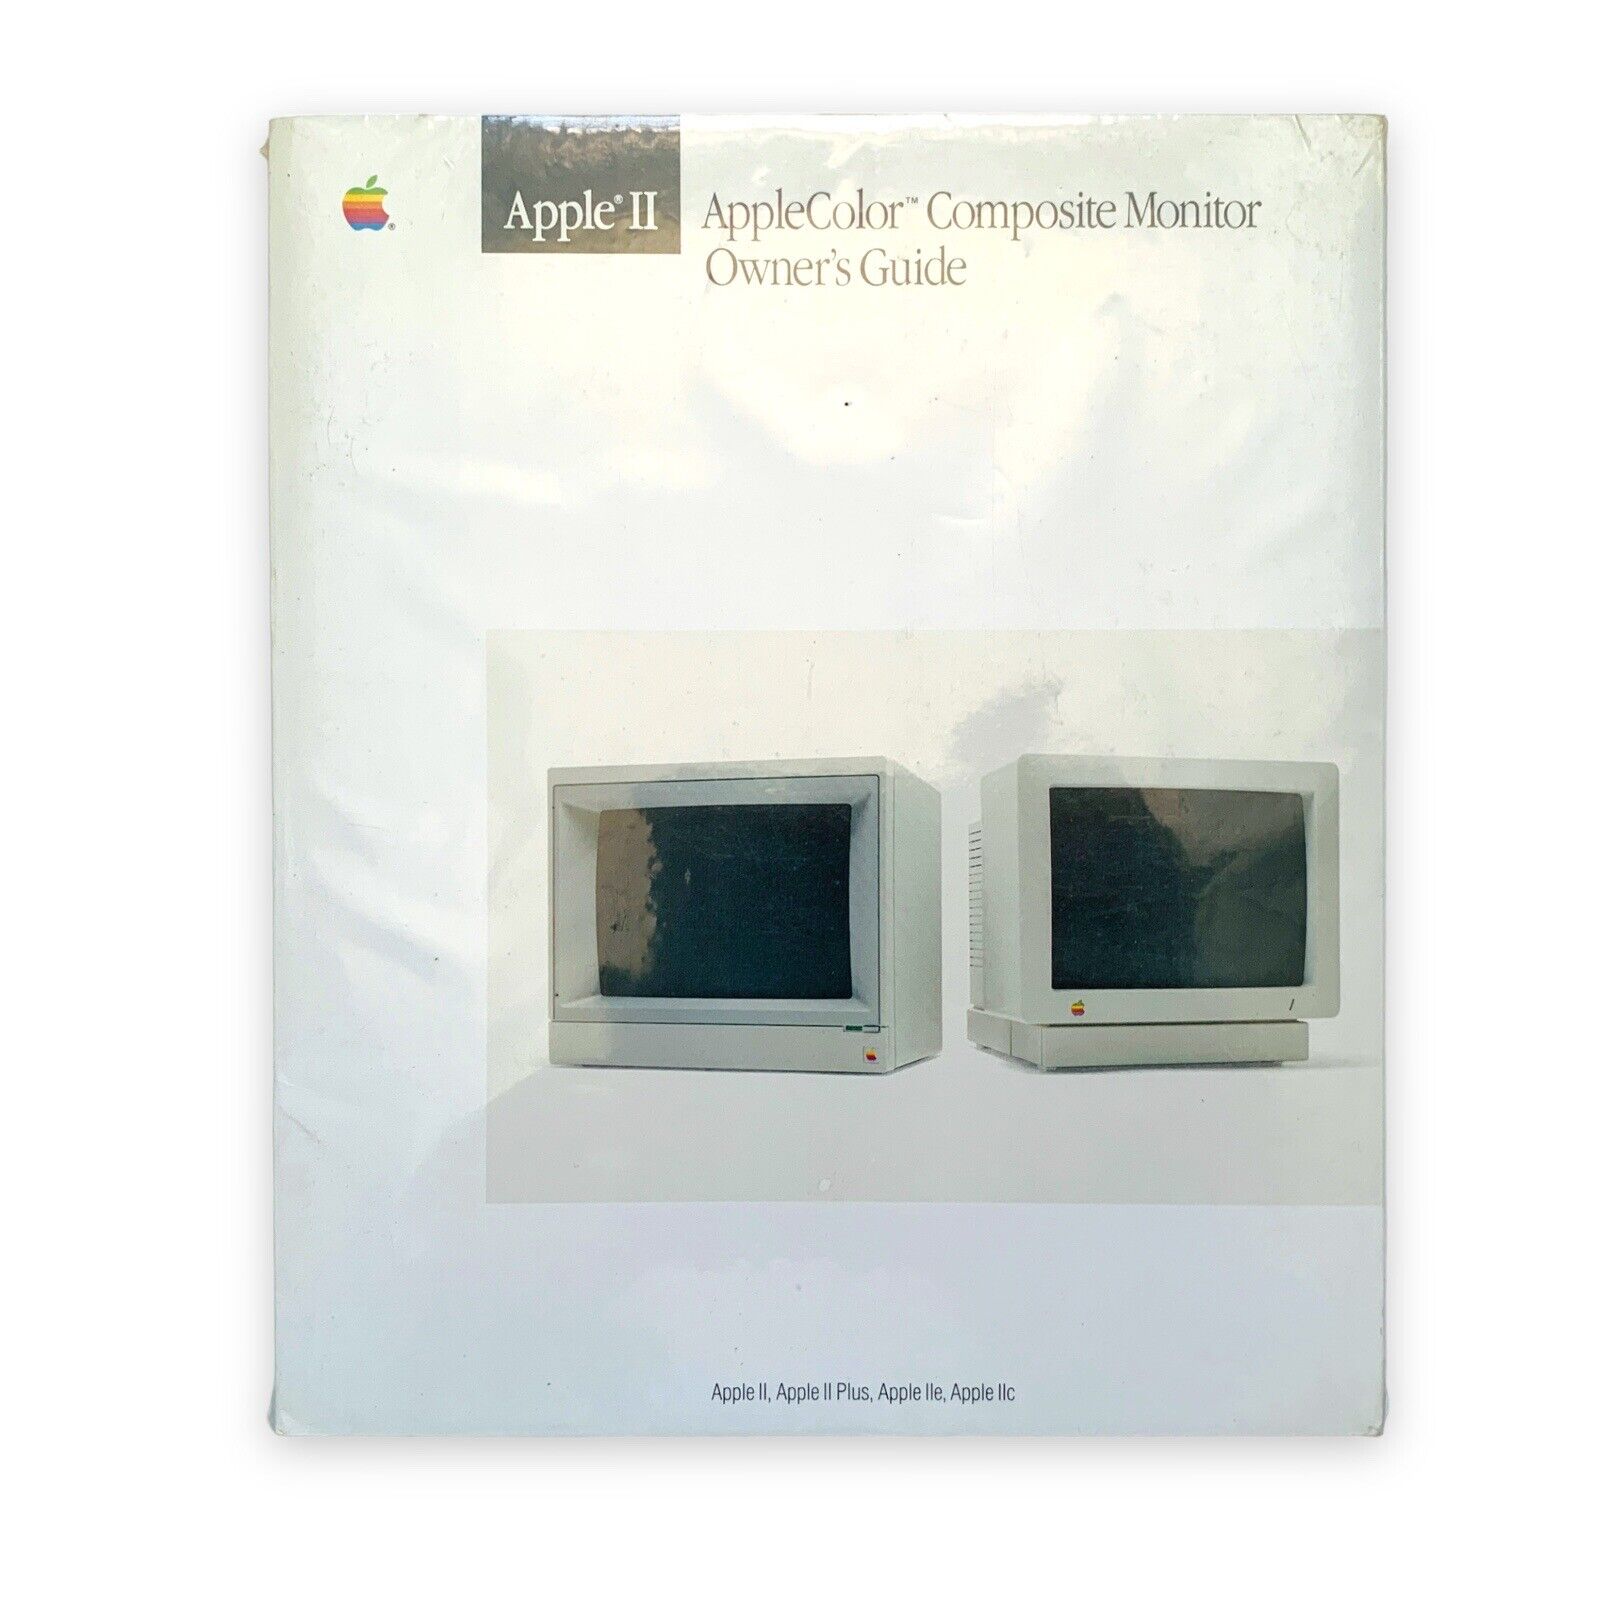 Apple II AppleColor Composite Monitor Owner’s Guide VTG 1980s NOS Sealed